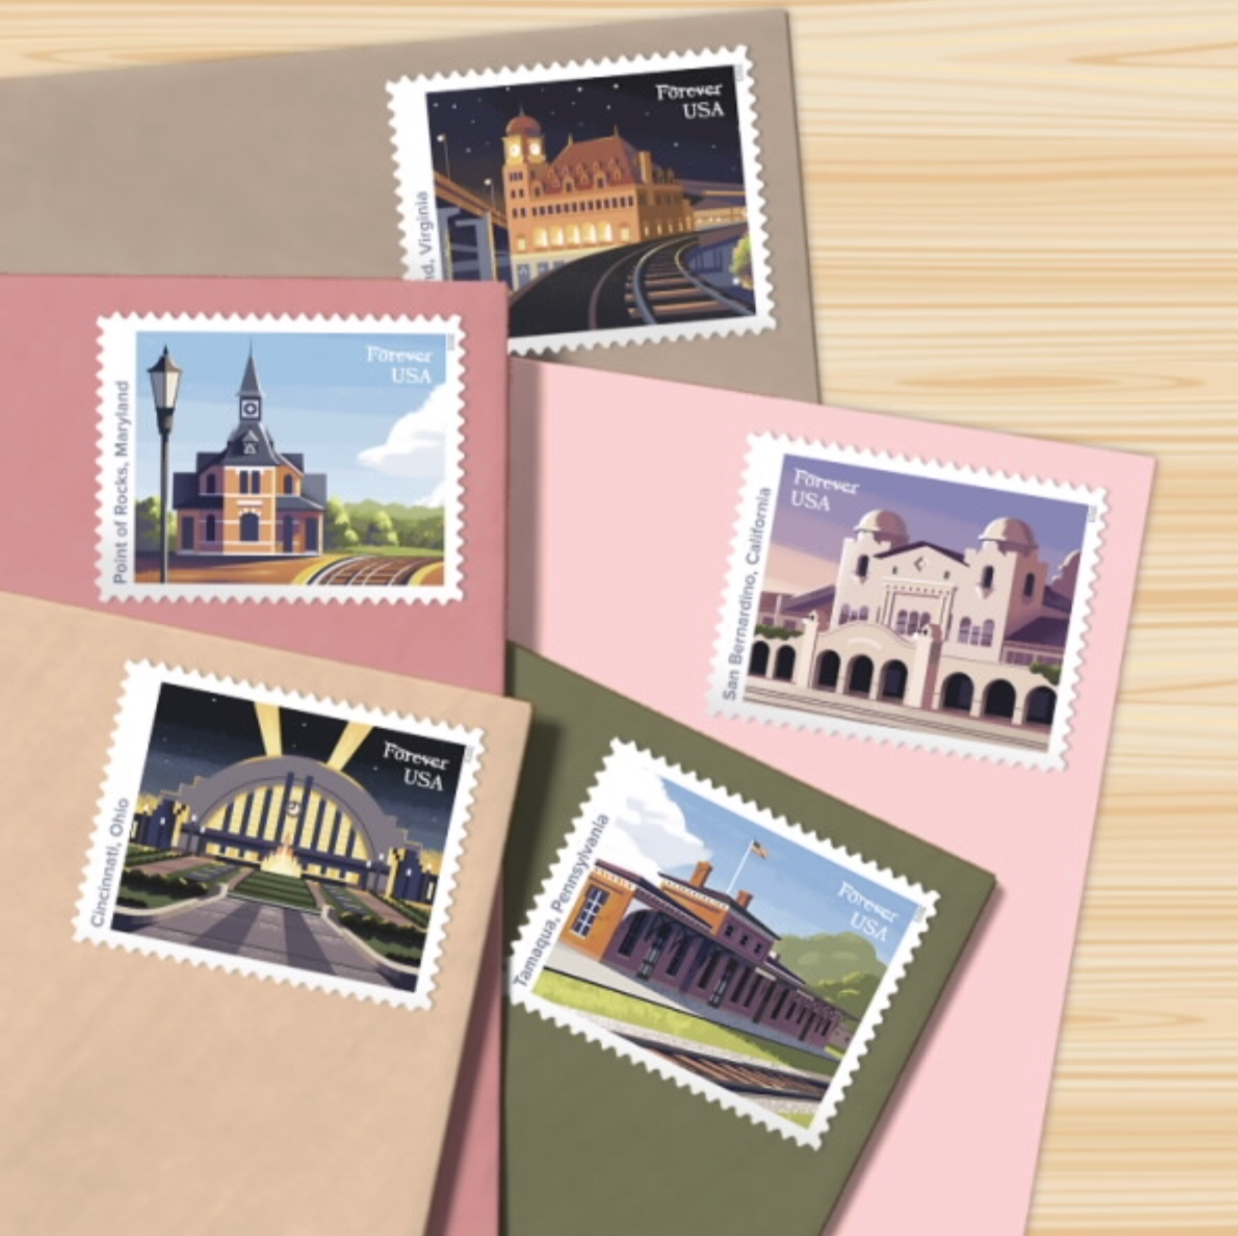 Print Postage & Prints Stamps Online - Online Postage Buy Stamps Online